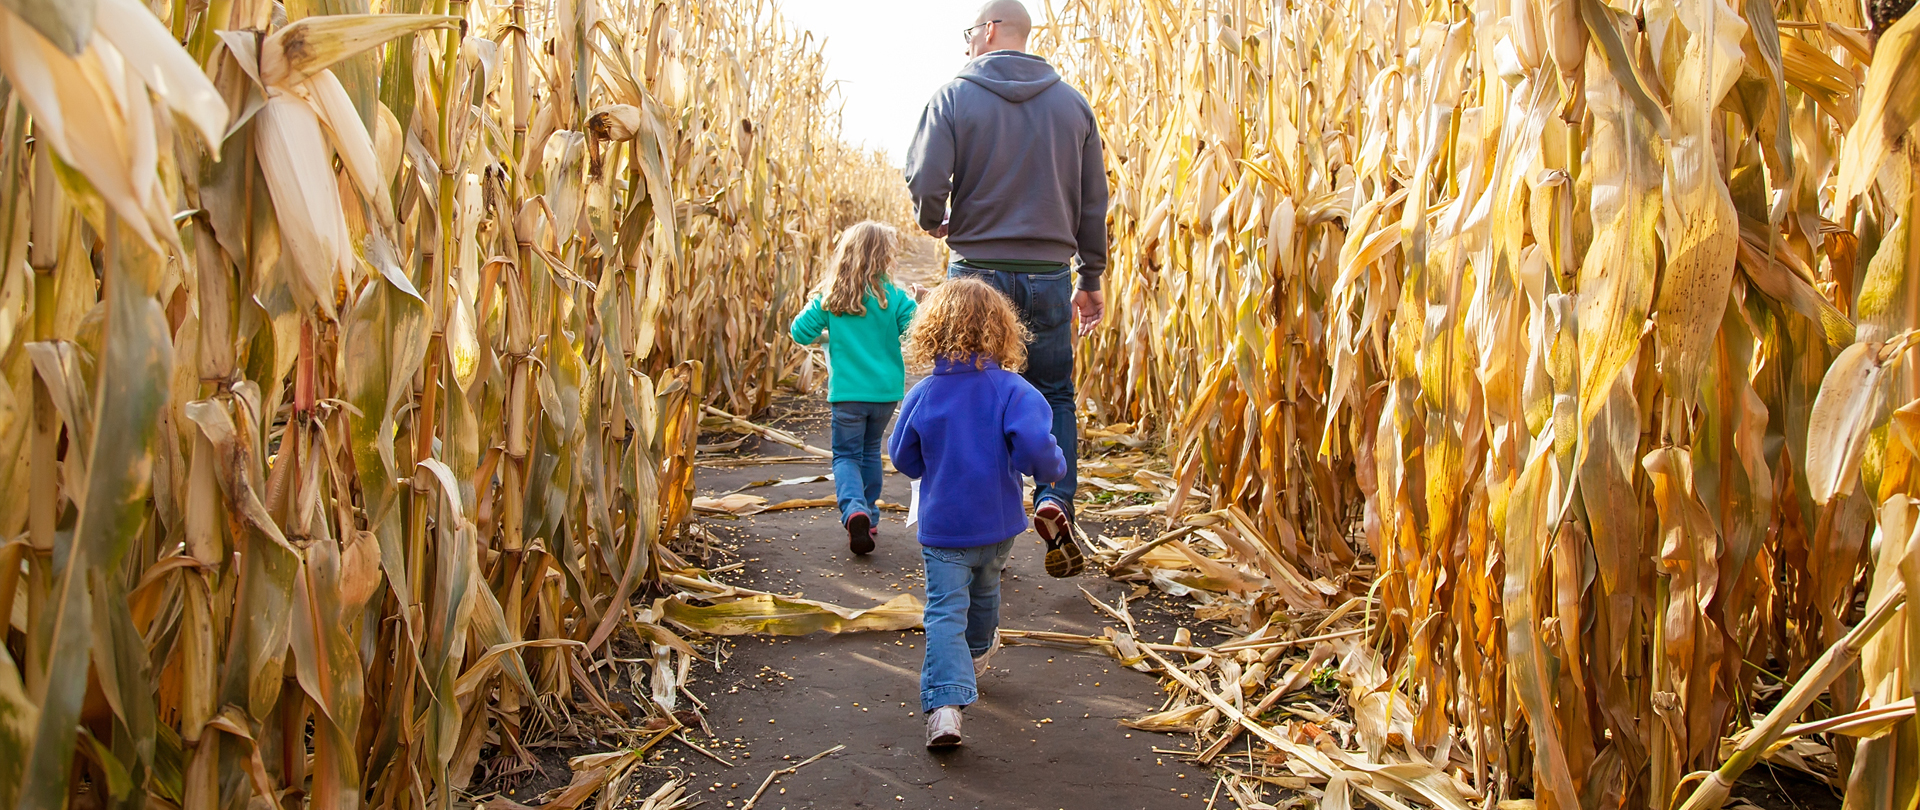 Family Corn Maze
Saturday, October 14
Hall Family Farm
Register now!
